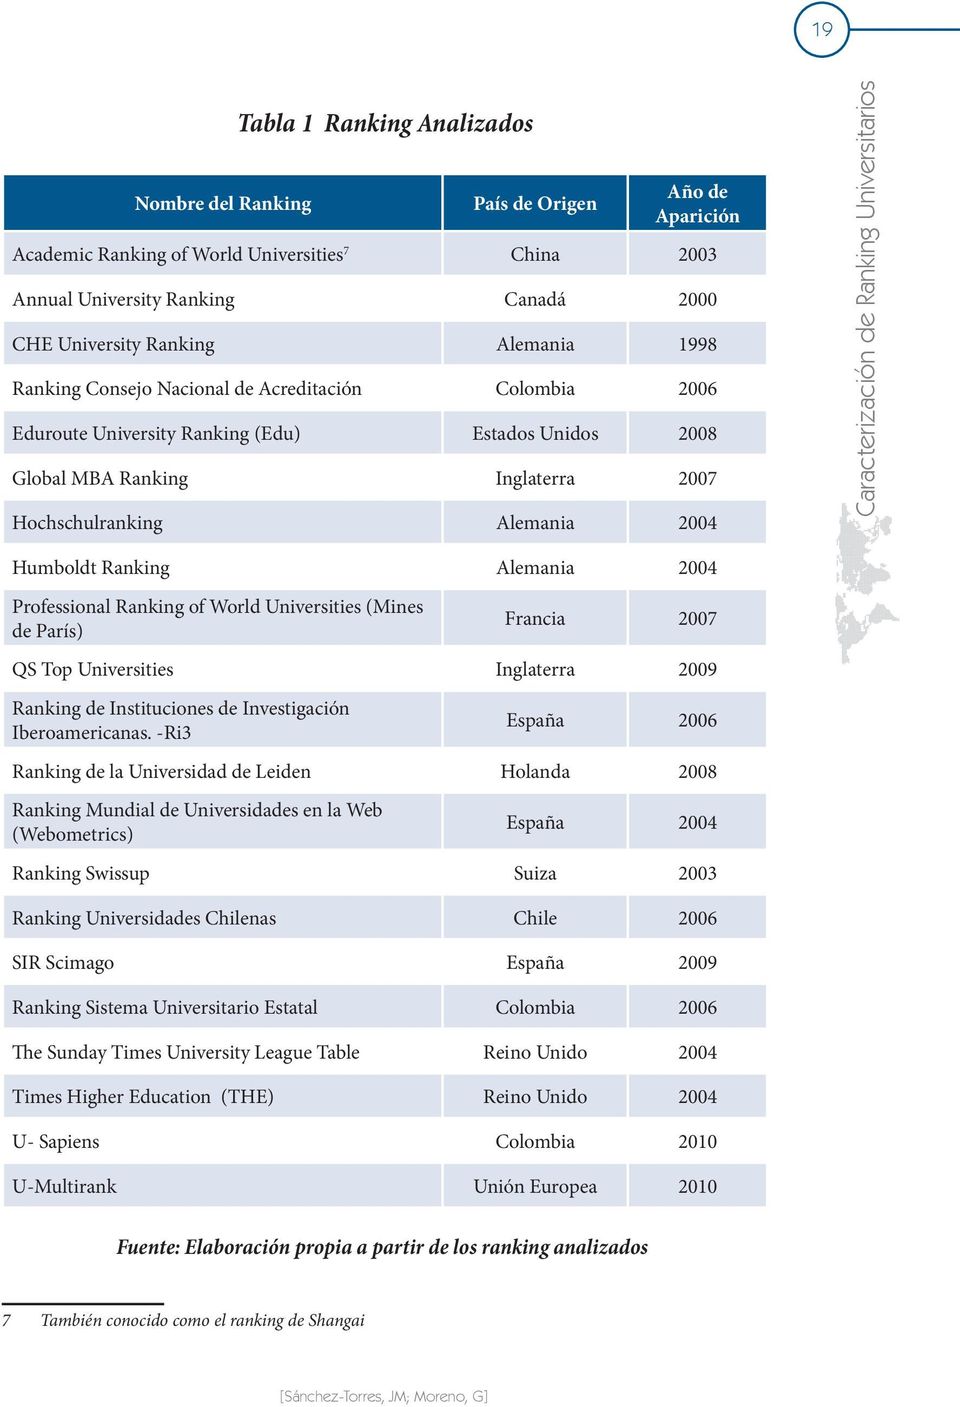 Ranking Alemania 2004 Professional Ranking of World Universities (Mines de París) Francia 2007 QS Top Universities Inglaterra 2009 Ranking de Instituciones de Investigación Iberoamericanas.